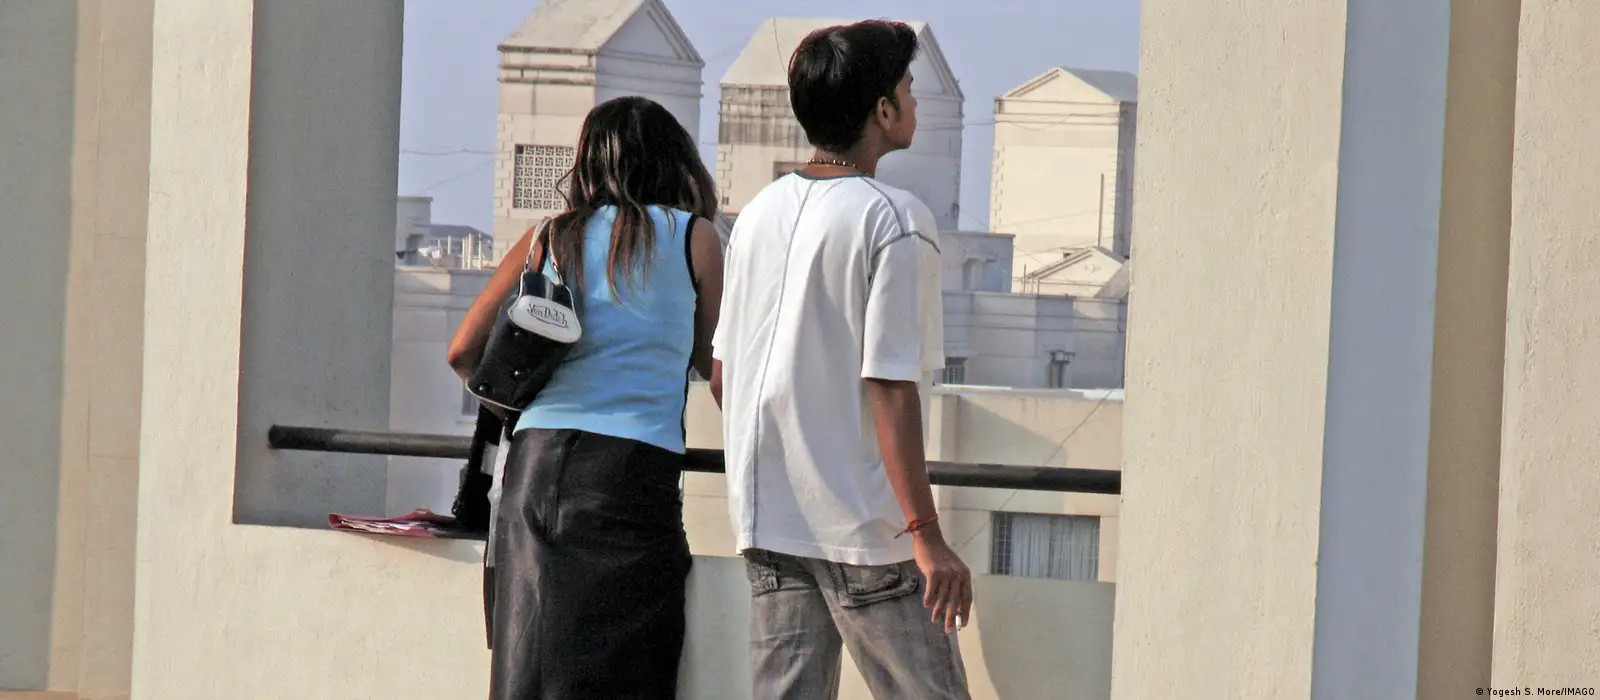 4 Sal Ki Bachi Xxx - India: Calls to lower age of consent to 16 over teen romance â€“ DW â€“  12/29/2022